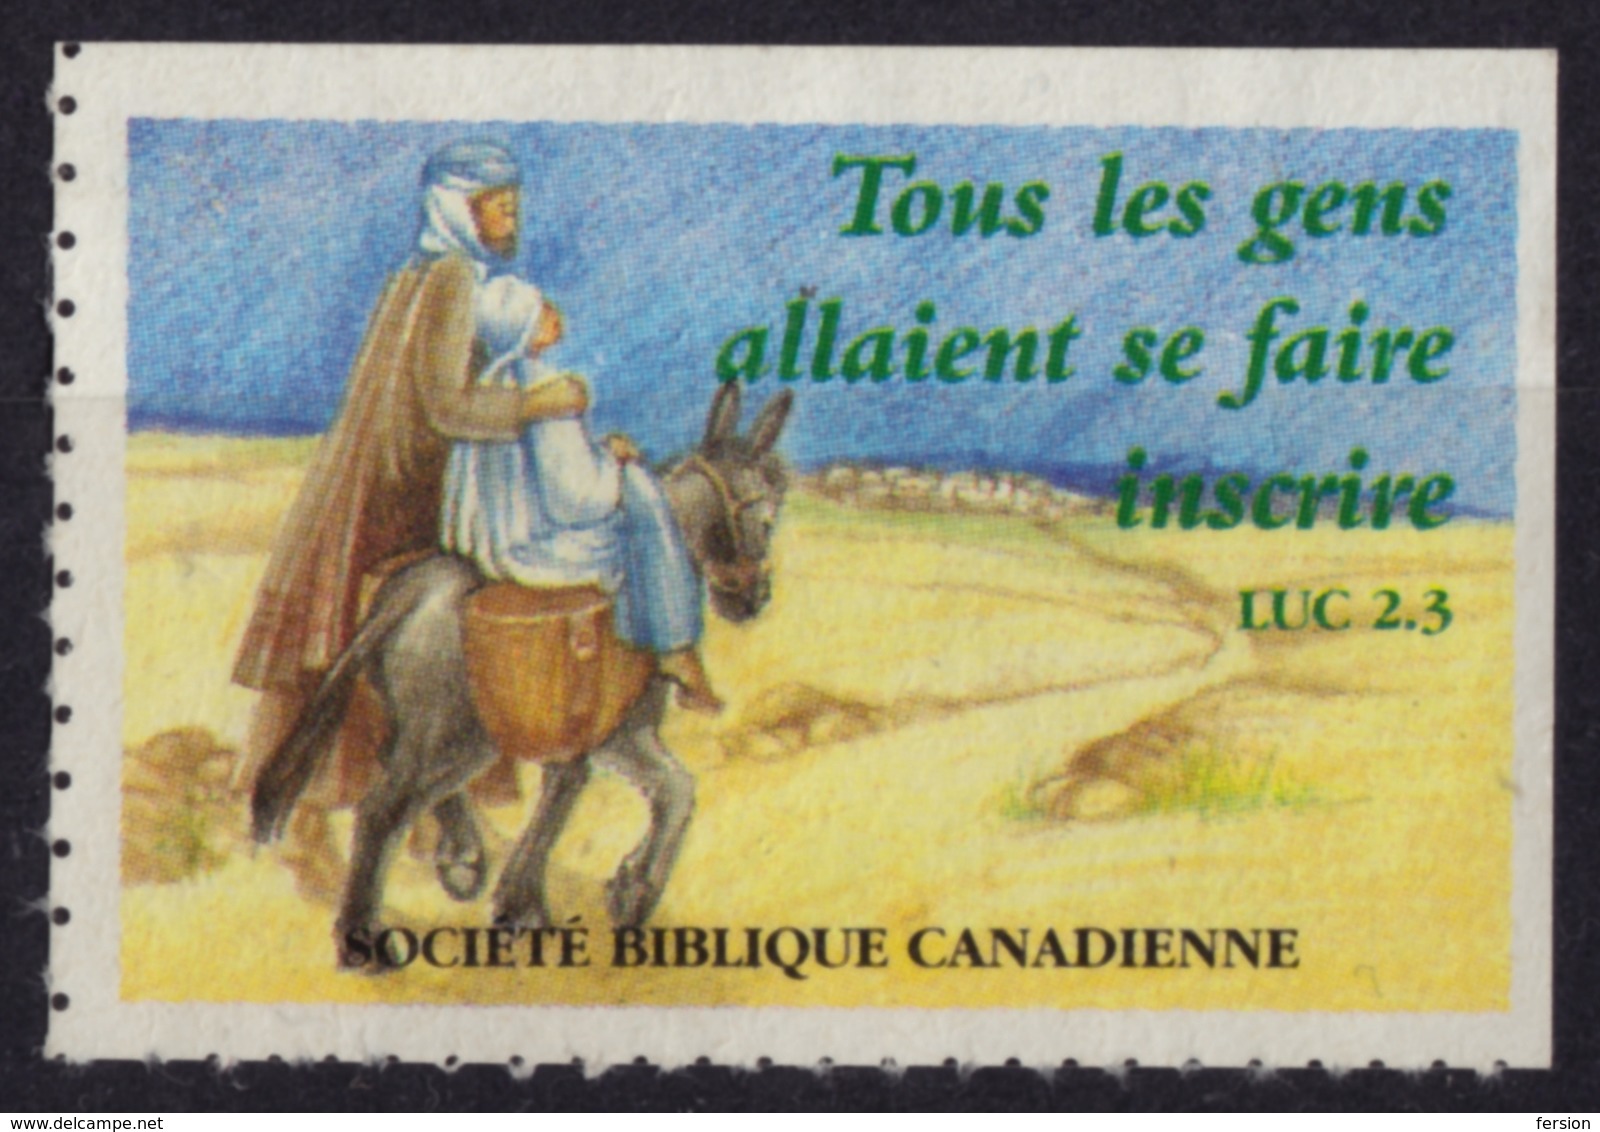 CANADA Bible Society / Christianity - Charity Stamp / Label / Cinderella / Vignette  - Used - Mary Joseph Donkey - Ezels